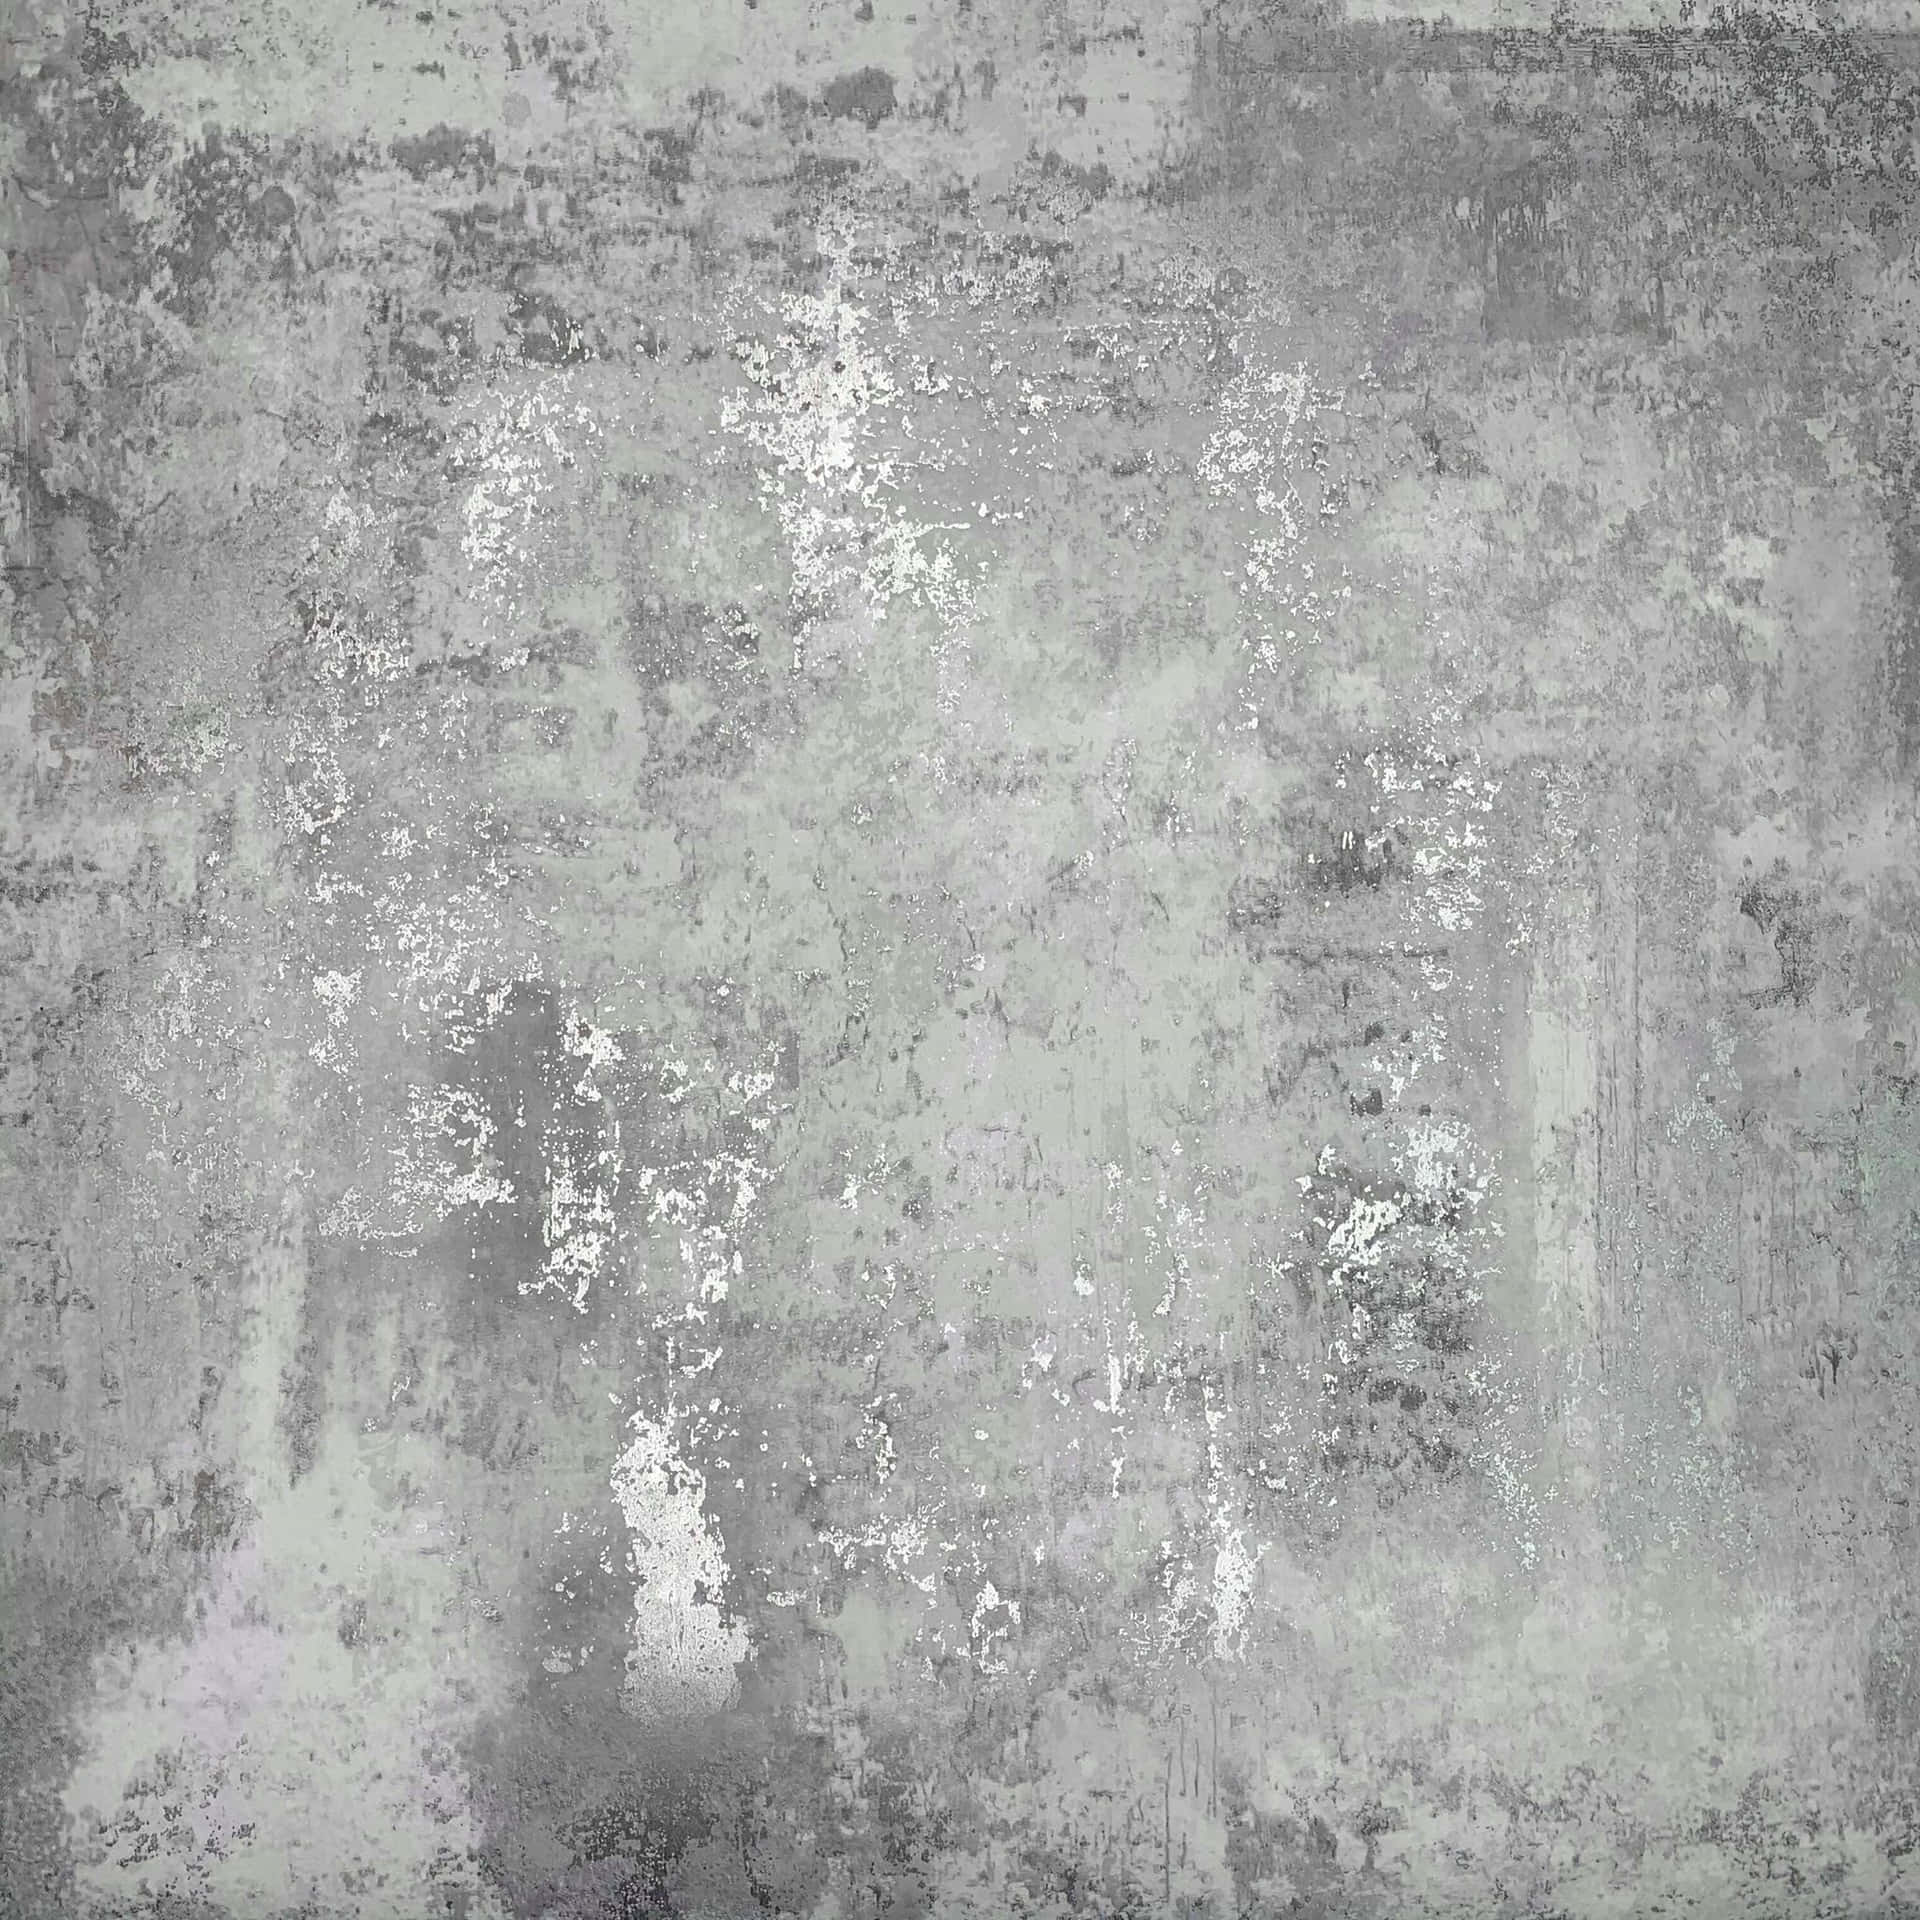 A closeup of a warm grey textured wall